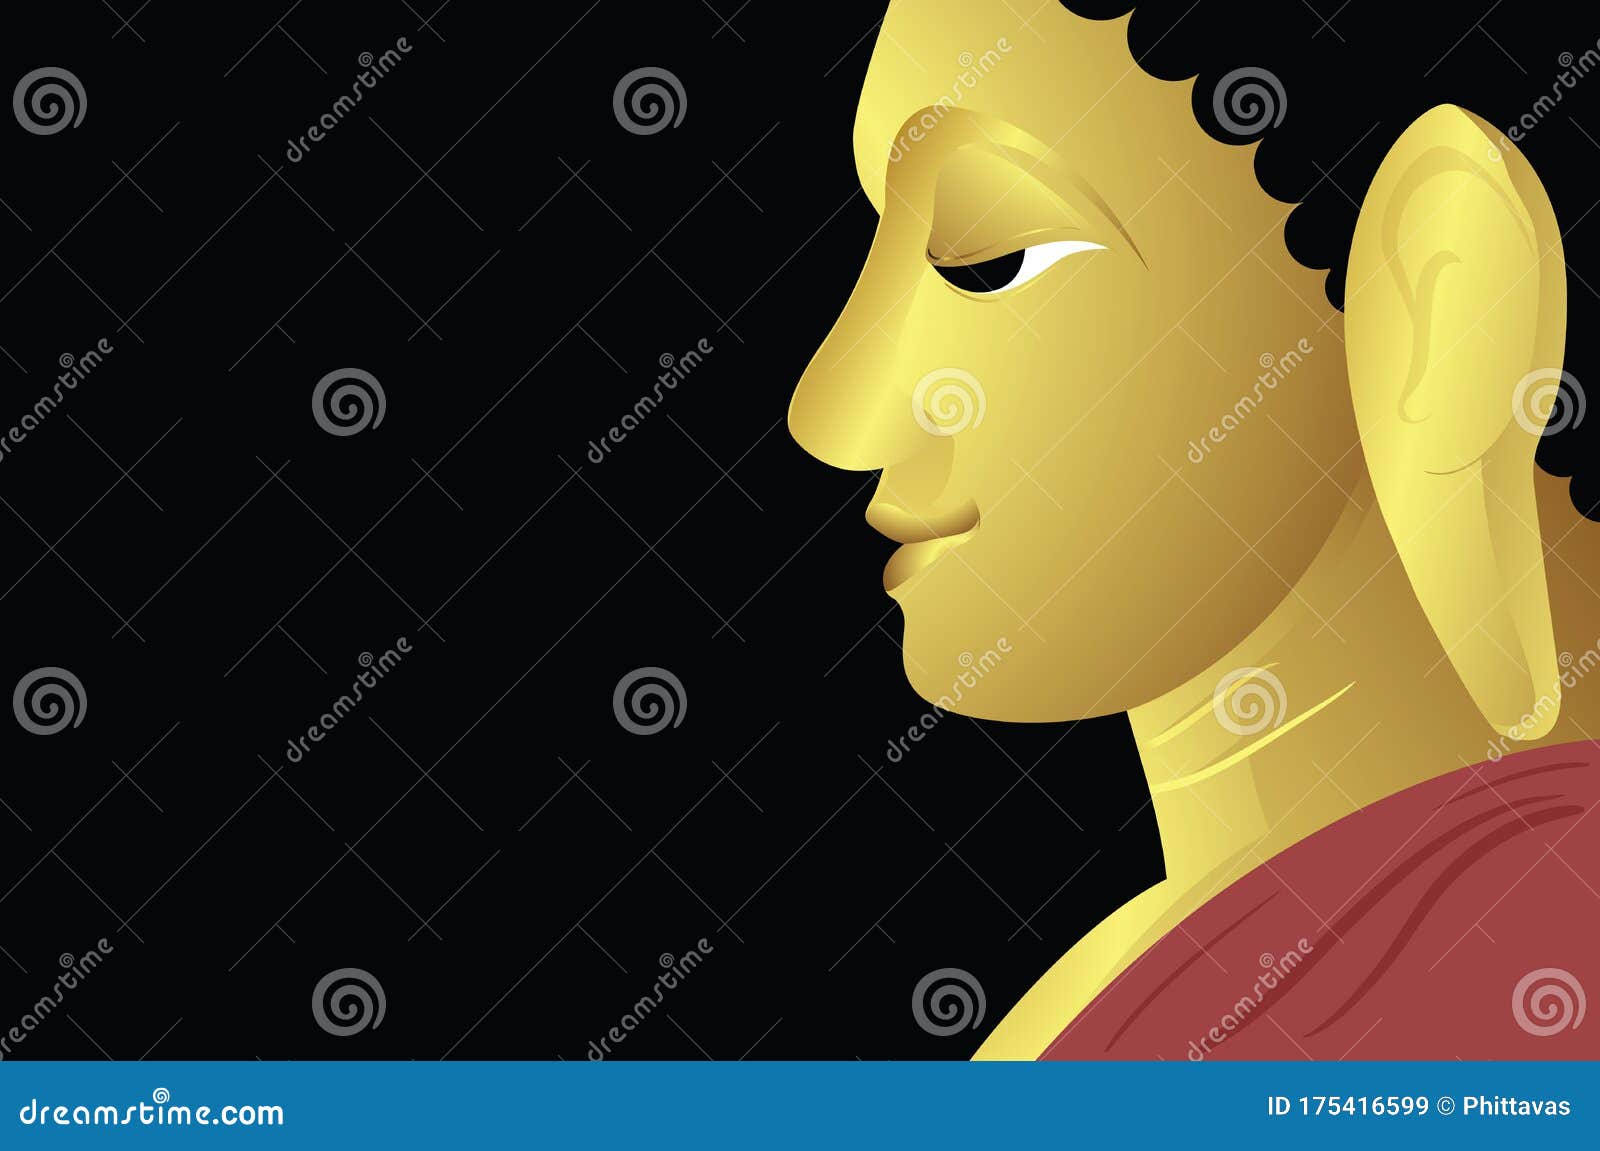 Premium Vector  Buddha head vector illustration line art isolated